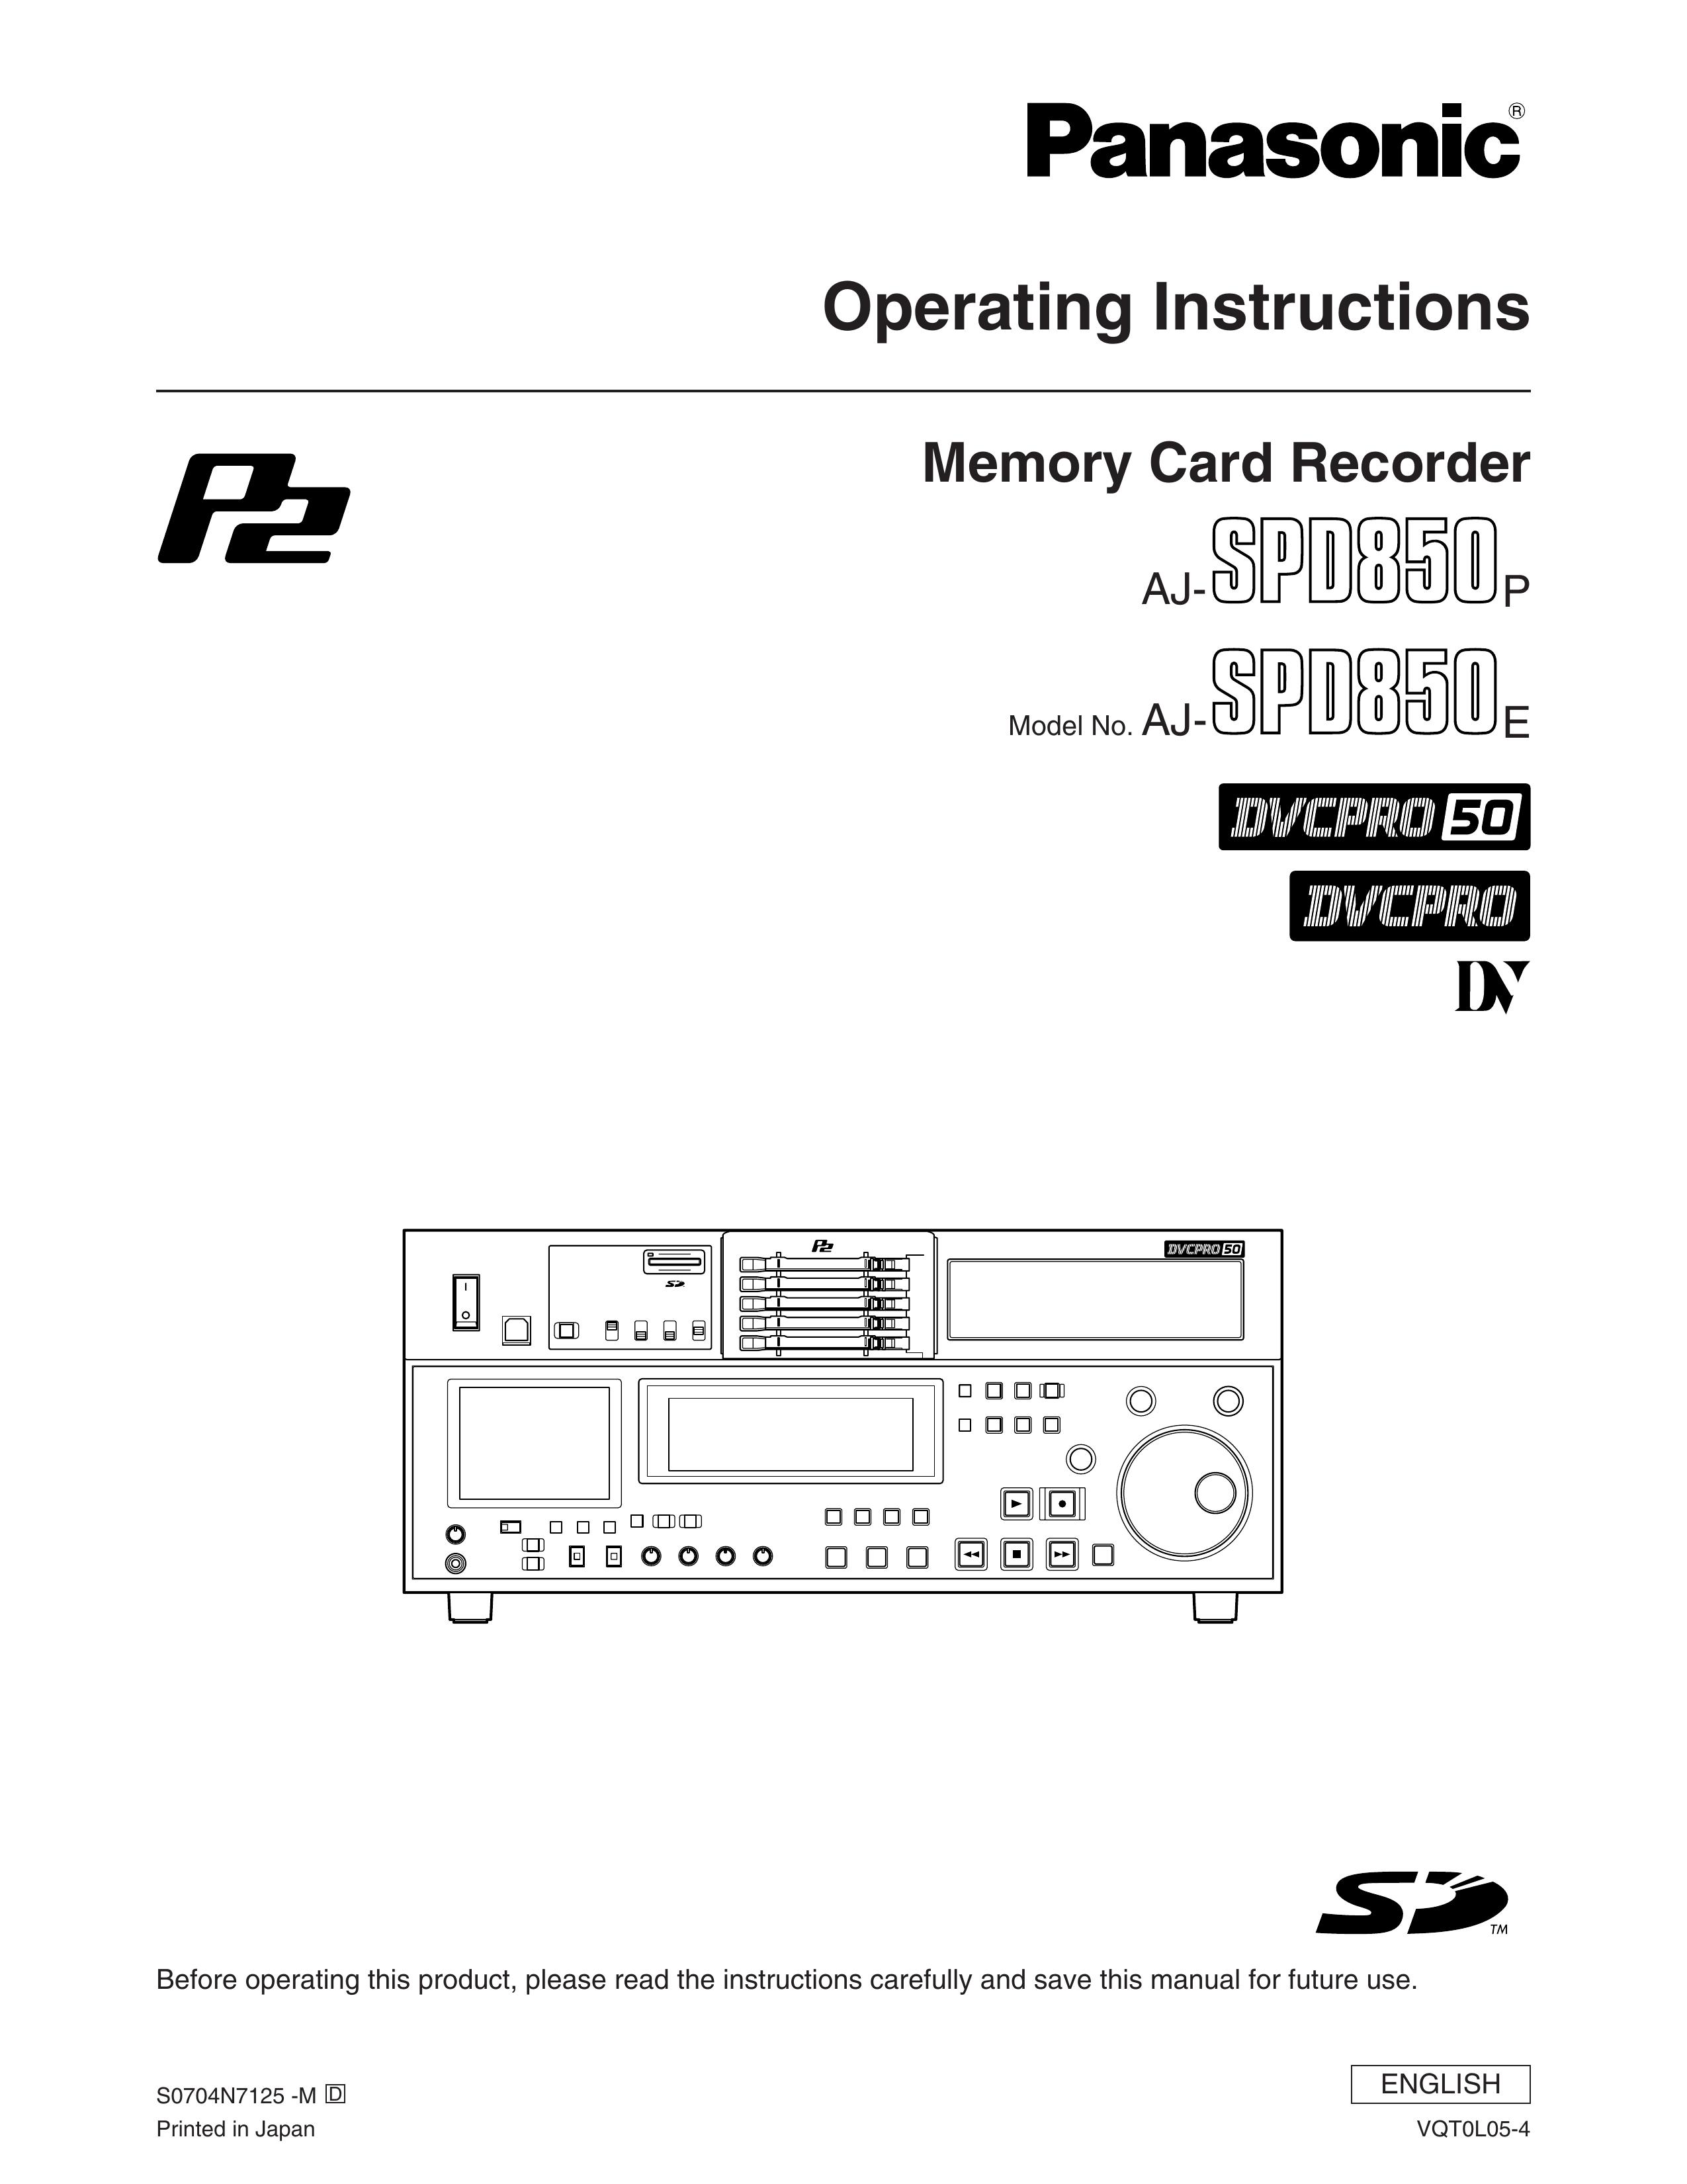 Panasonic AJ-spd850E Camera Accessories User Manual